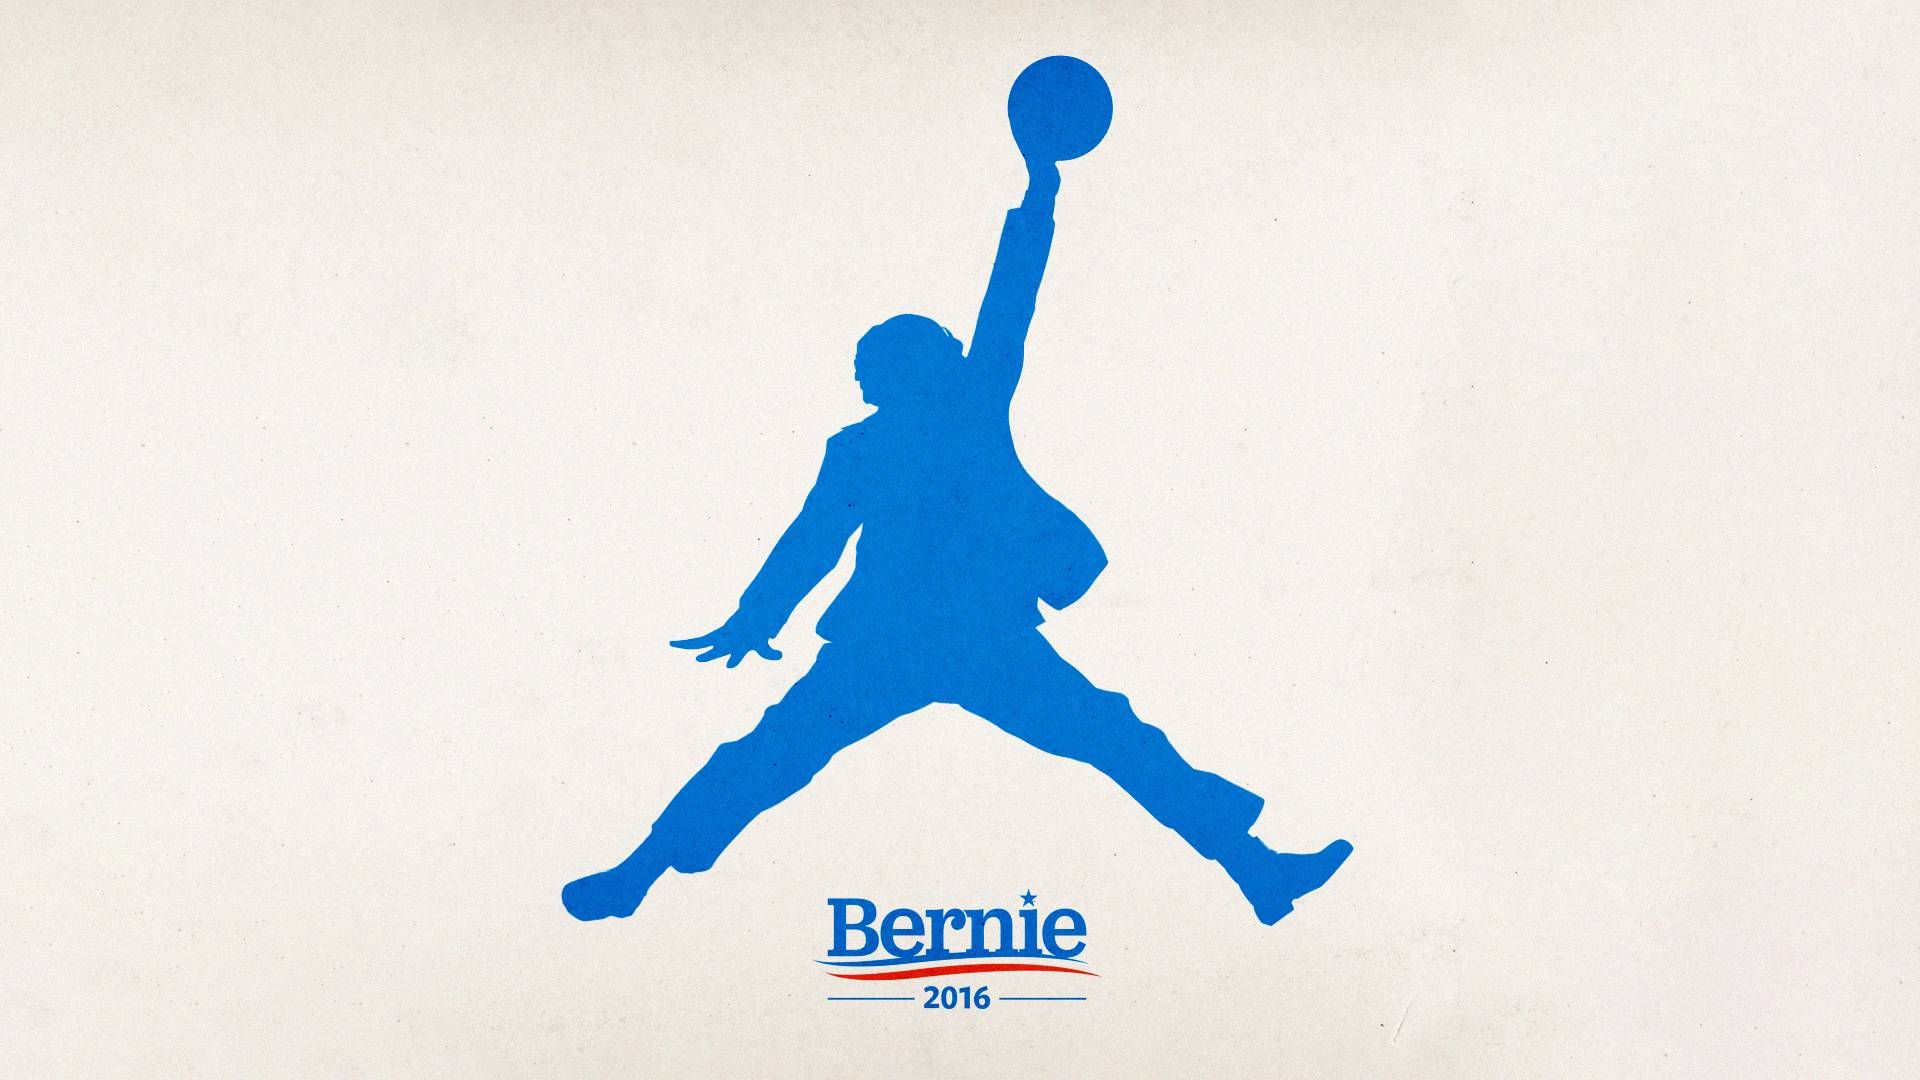 Bernie Sanders Jumpman R Wallpaper